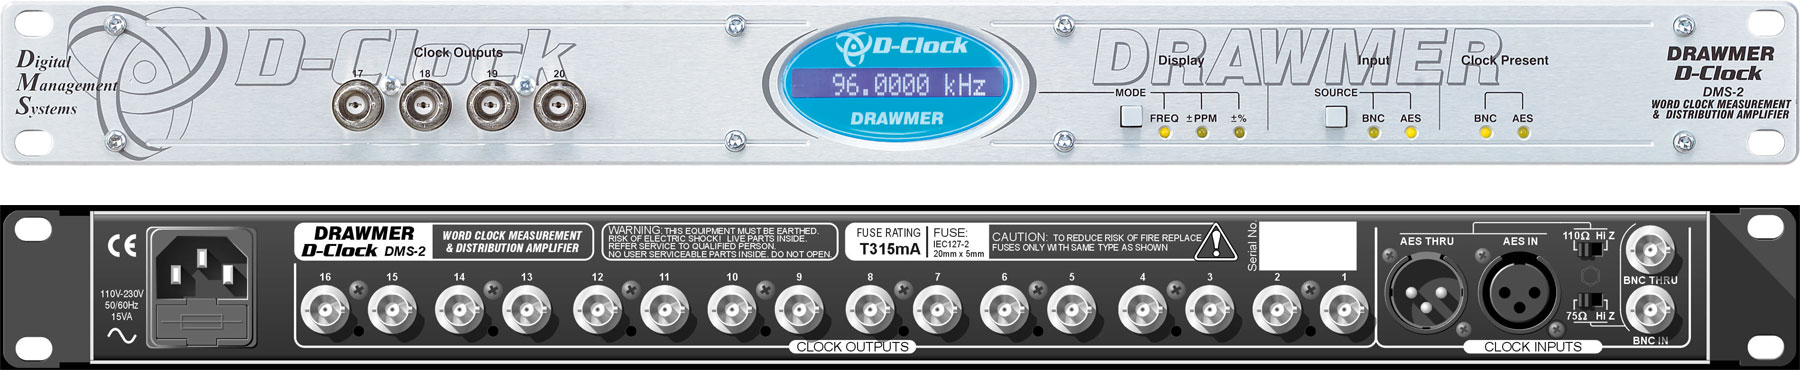 Drawmer DMS-2 D-CLOCK